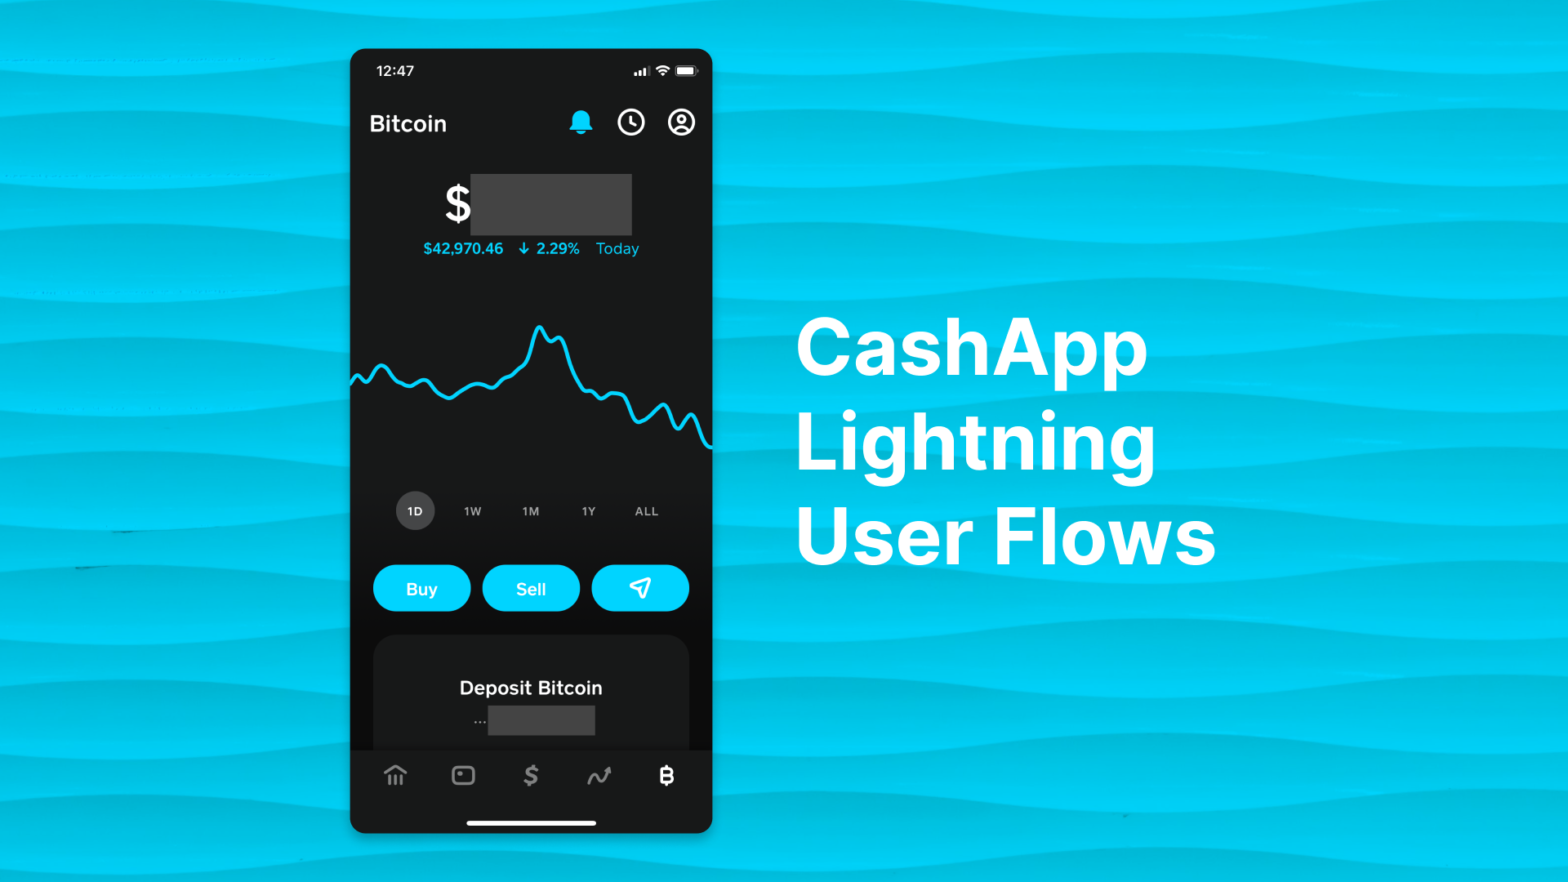 CashApp Lightning User Flows